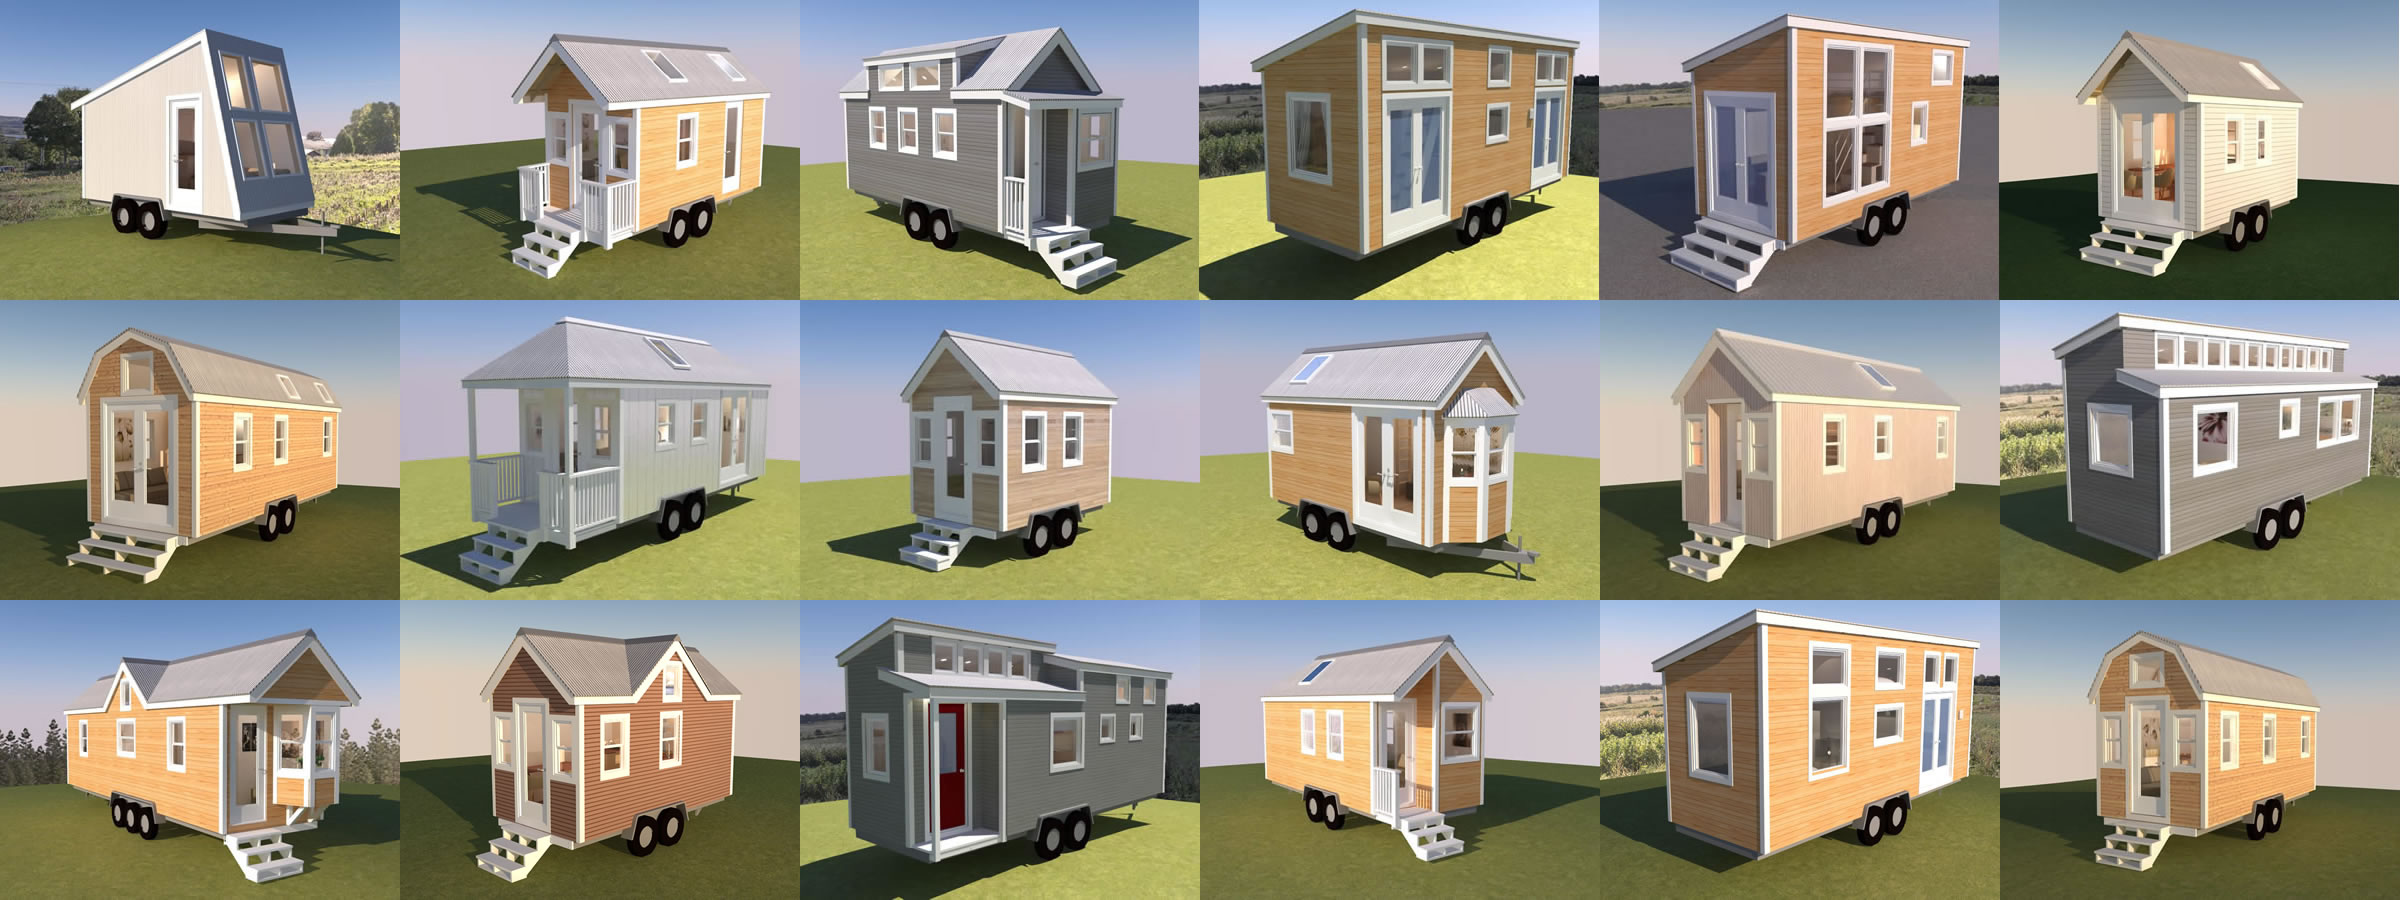 18 Tiny House Designs